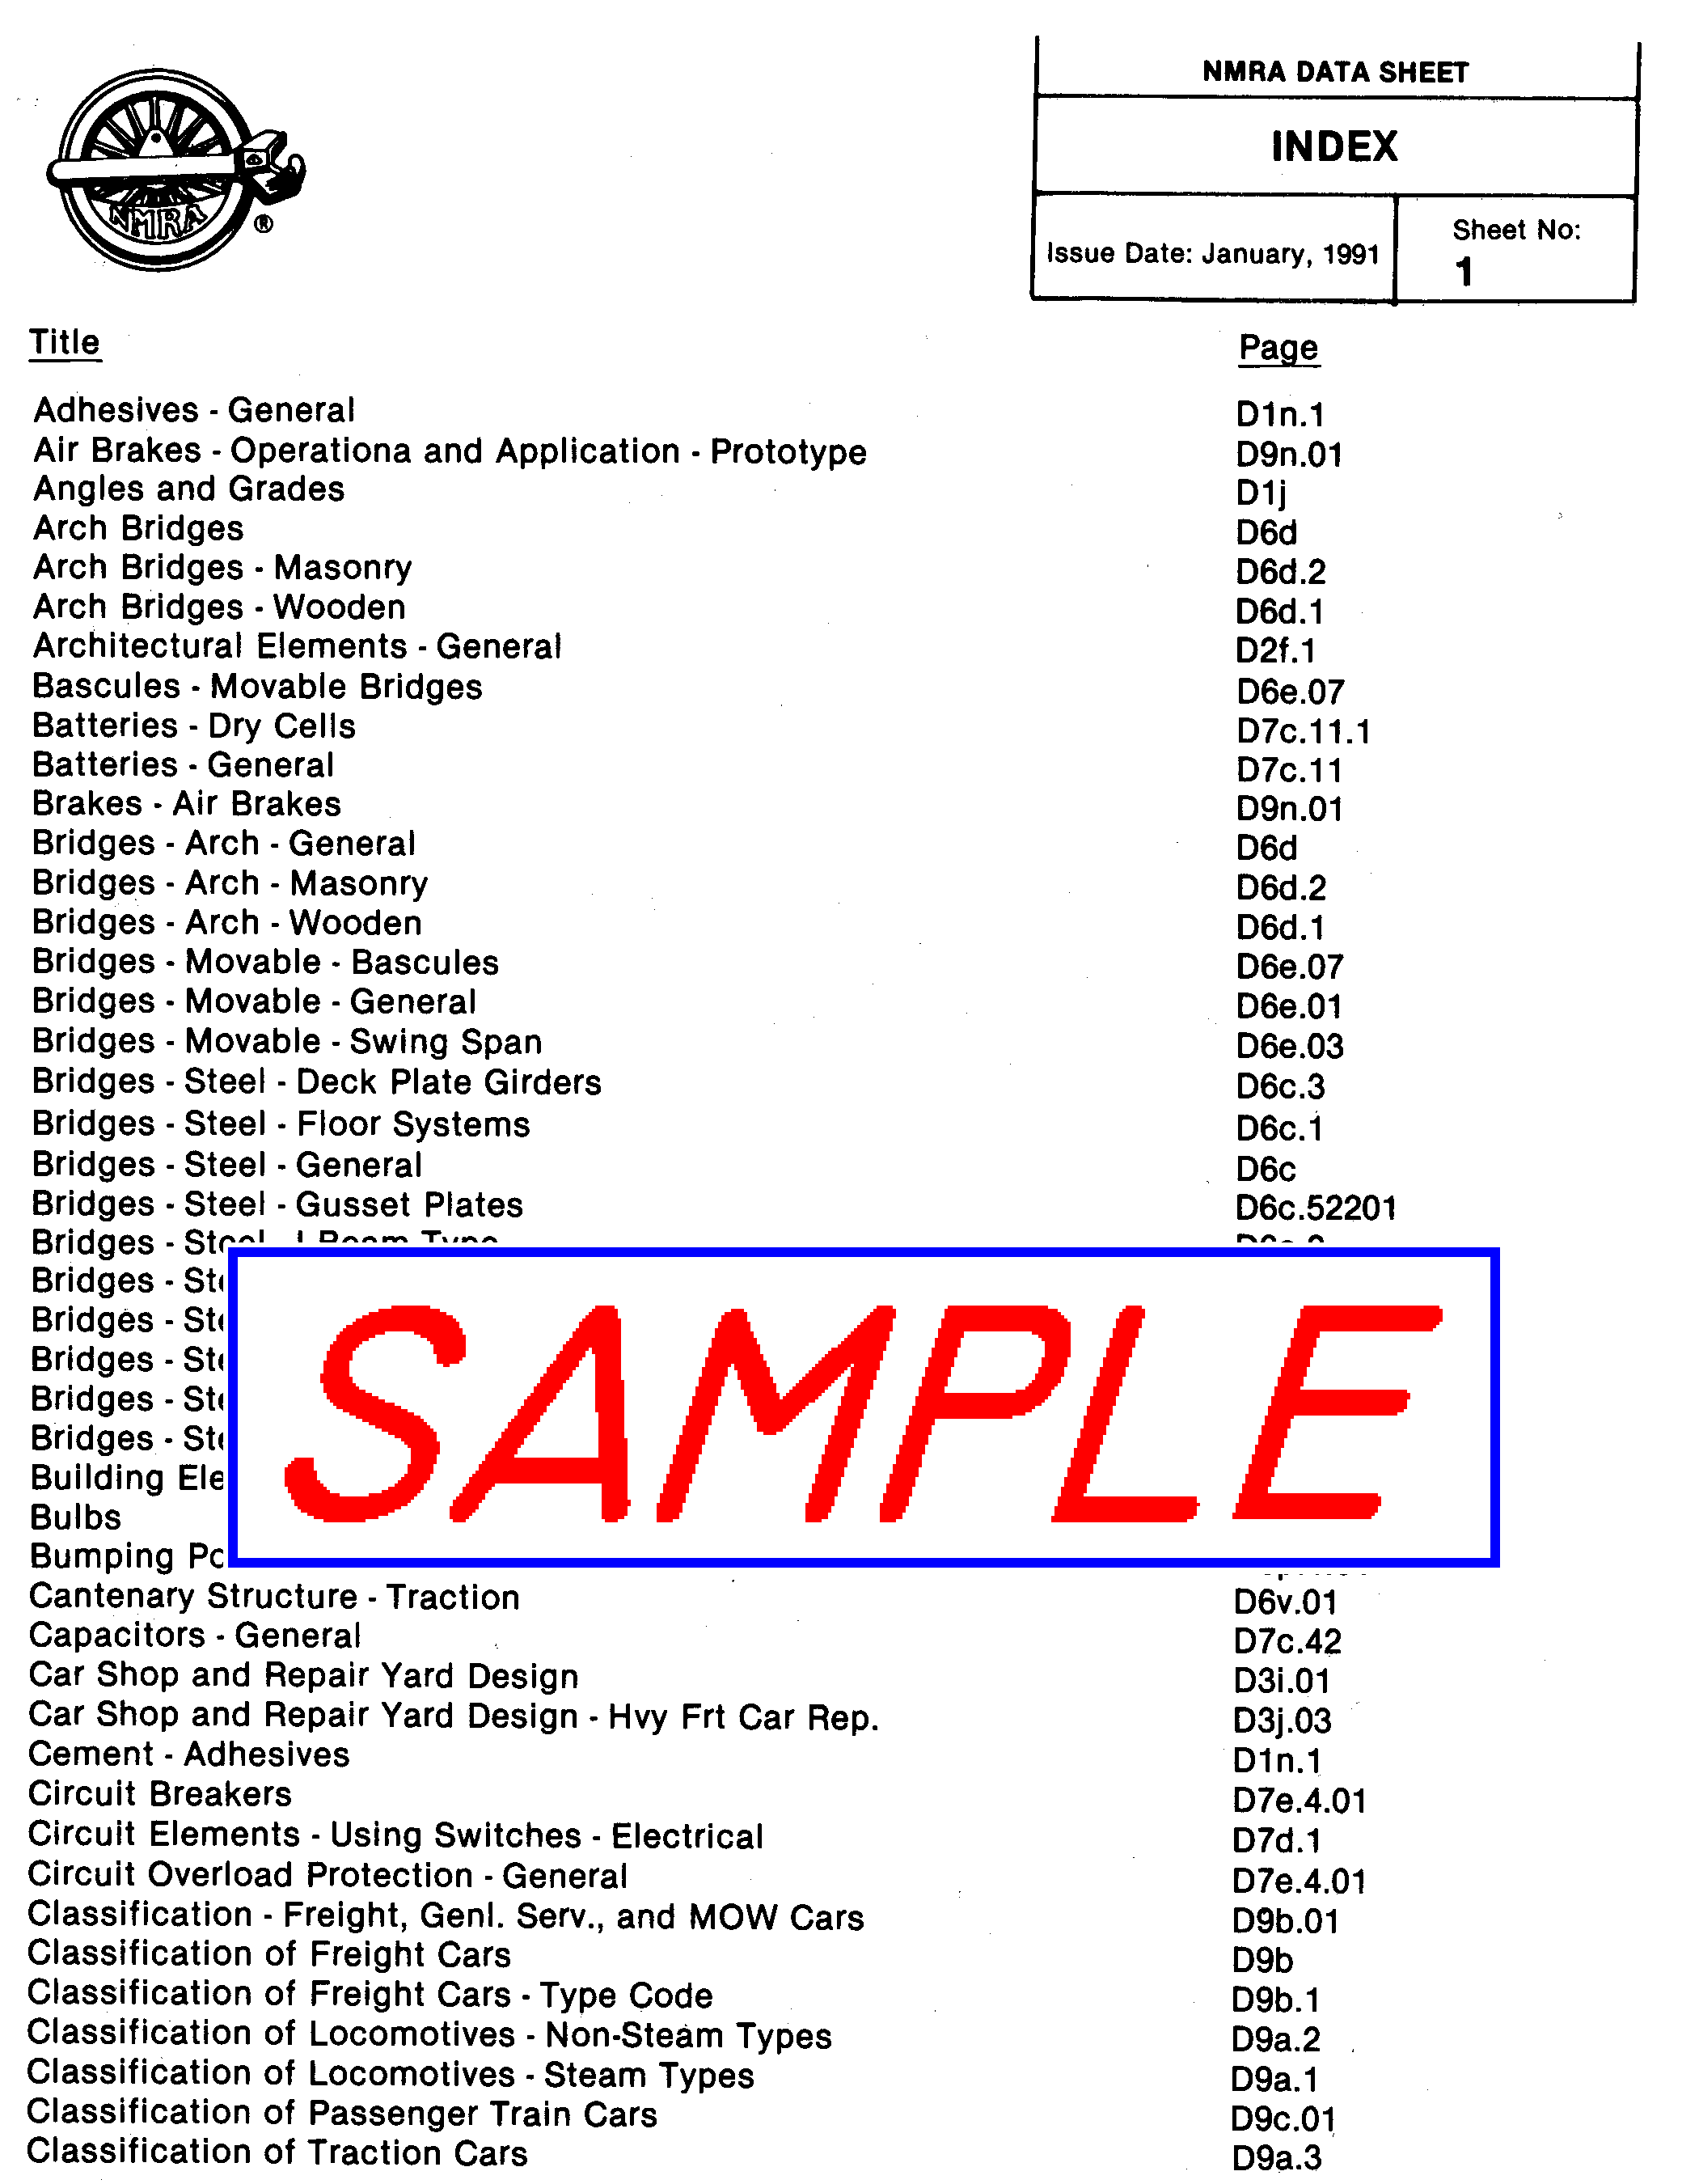 NMRA sample Data Sheet Index page